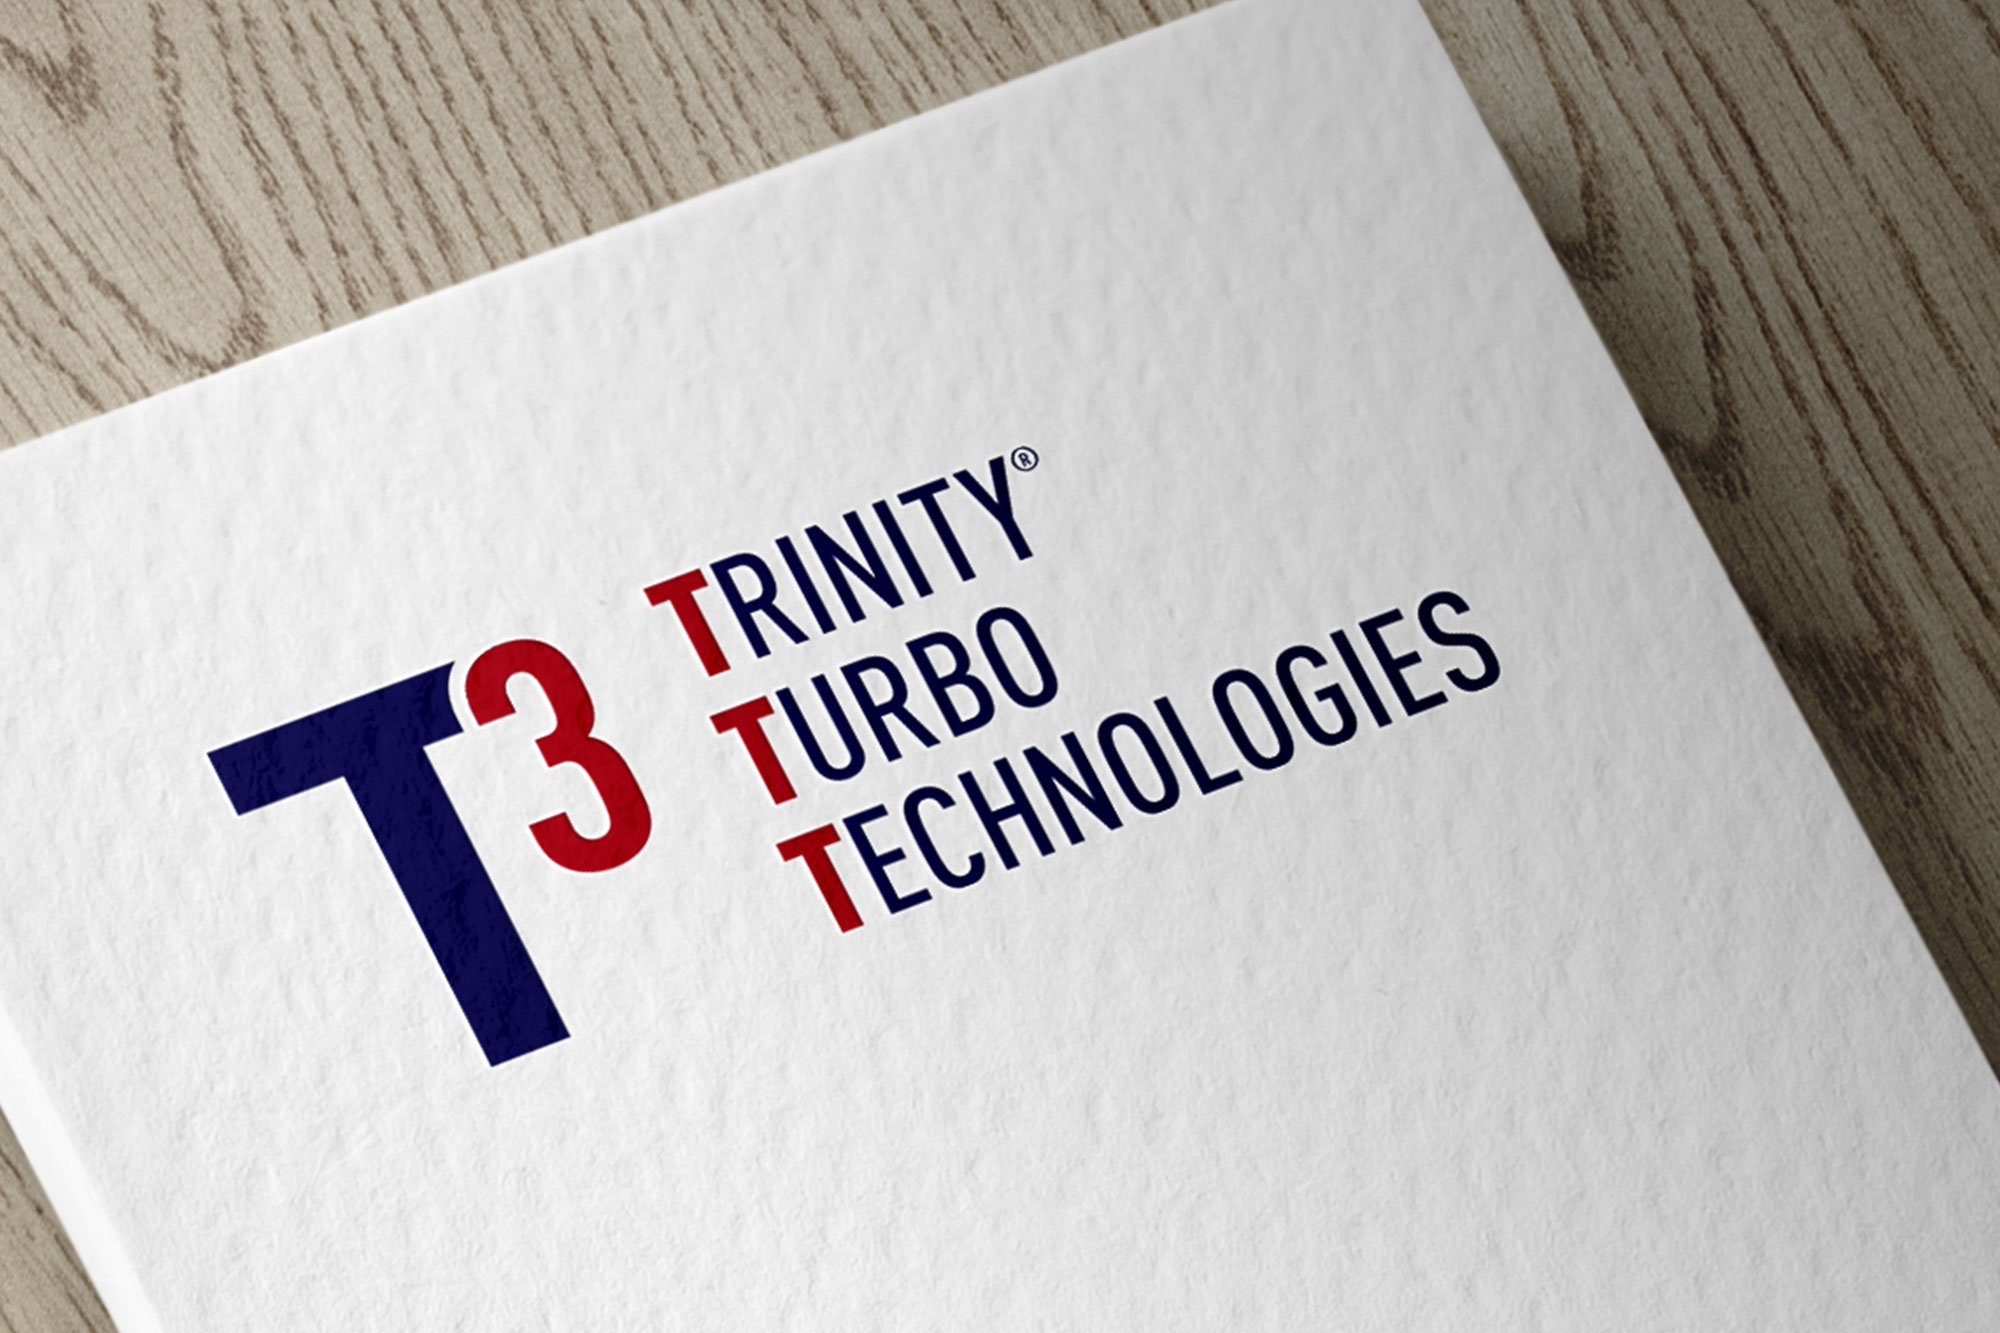 Trinity Turbo Technologies Logo